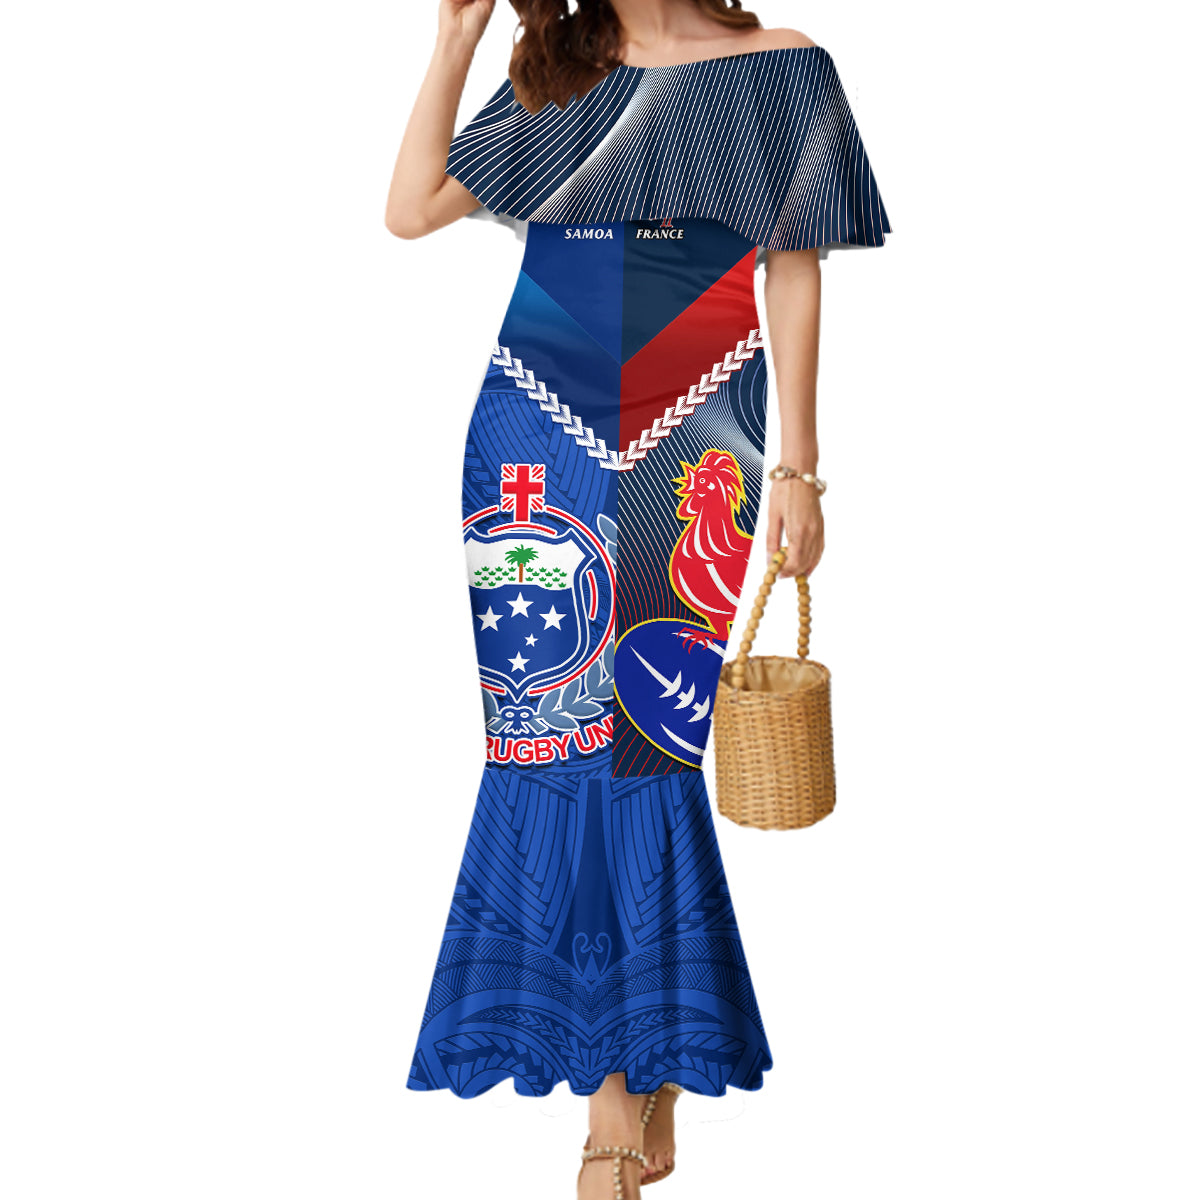 custom-samoa-and-france-rugby-mermaid-dress-2023-world-cup-manu-samoa-with-les-bleus